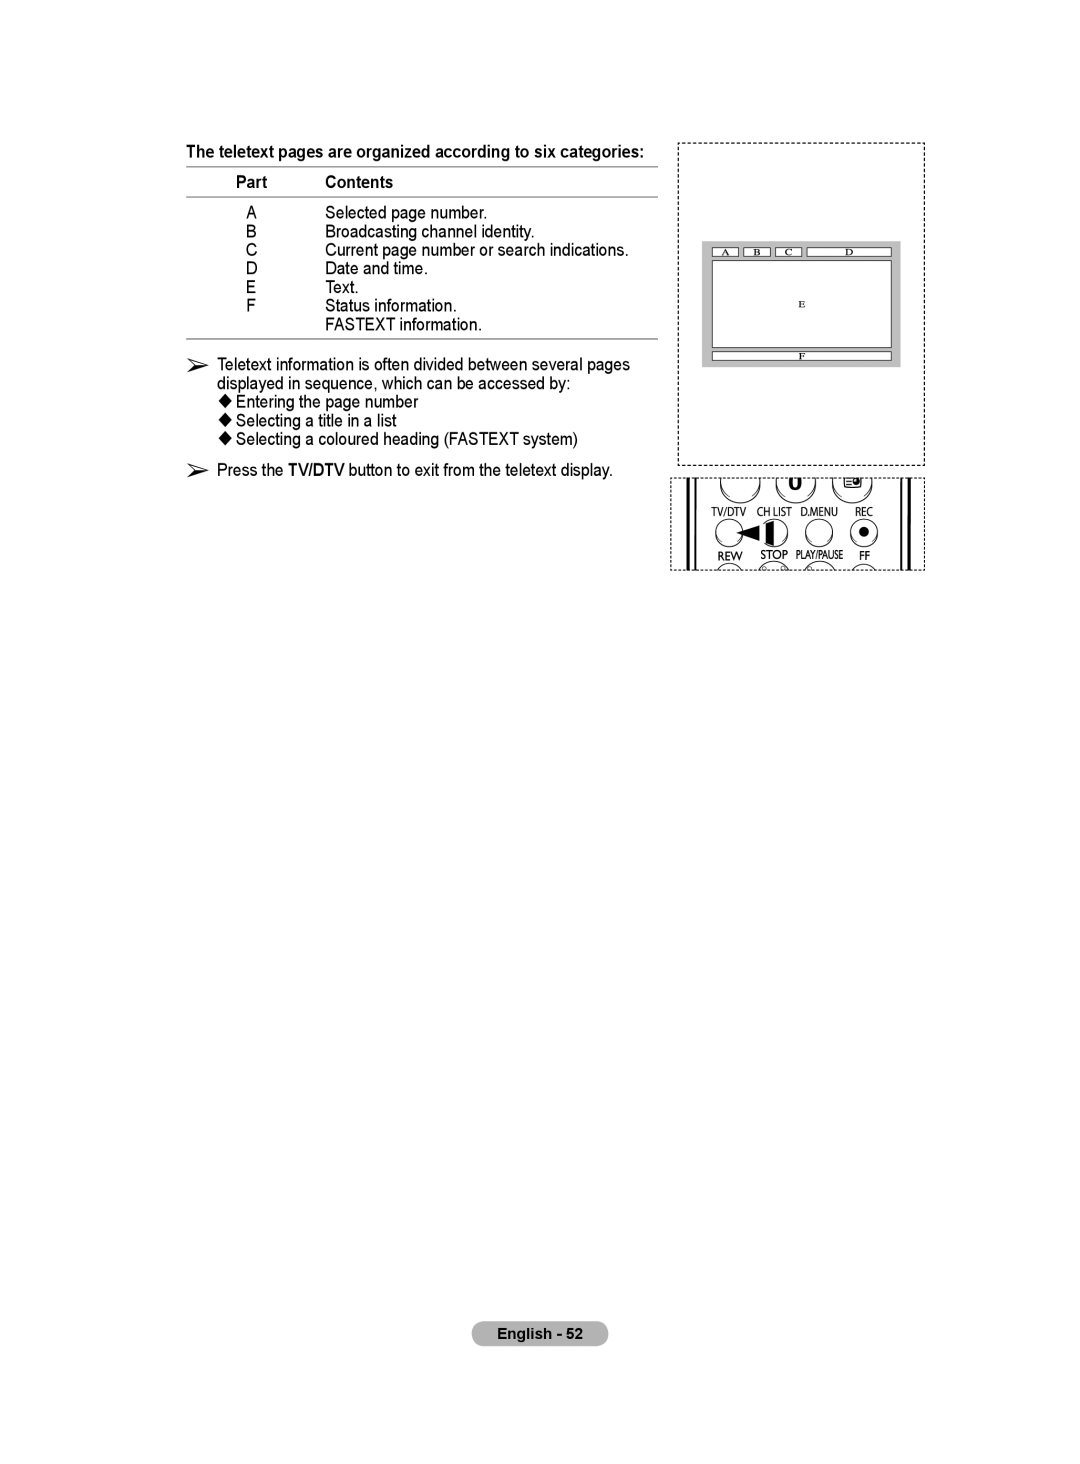 Samsung BN68-01171B-03 manual Part Contents 